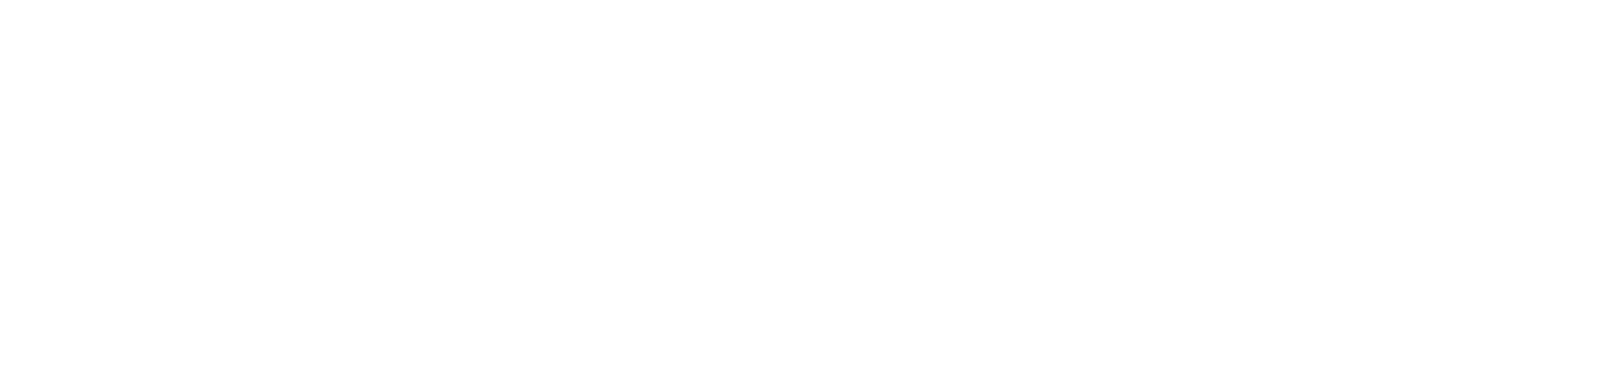 Skylight Health Group logo large for dark backgrounds (transparent PNG)